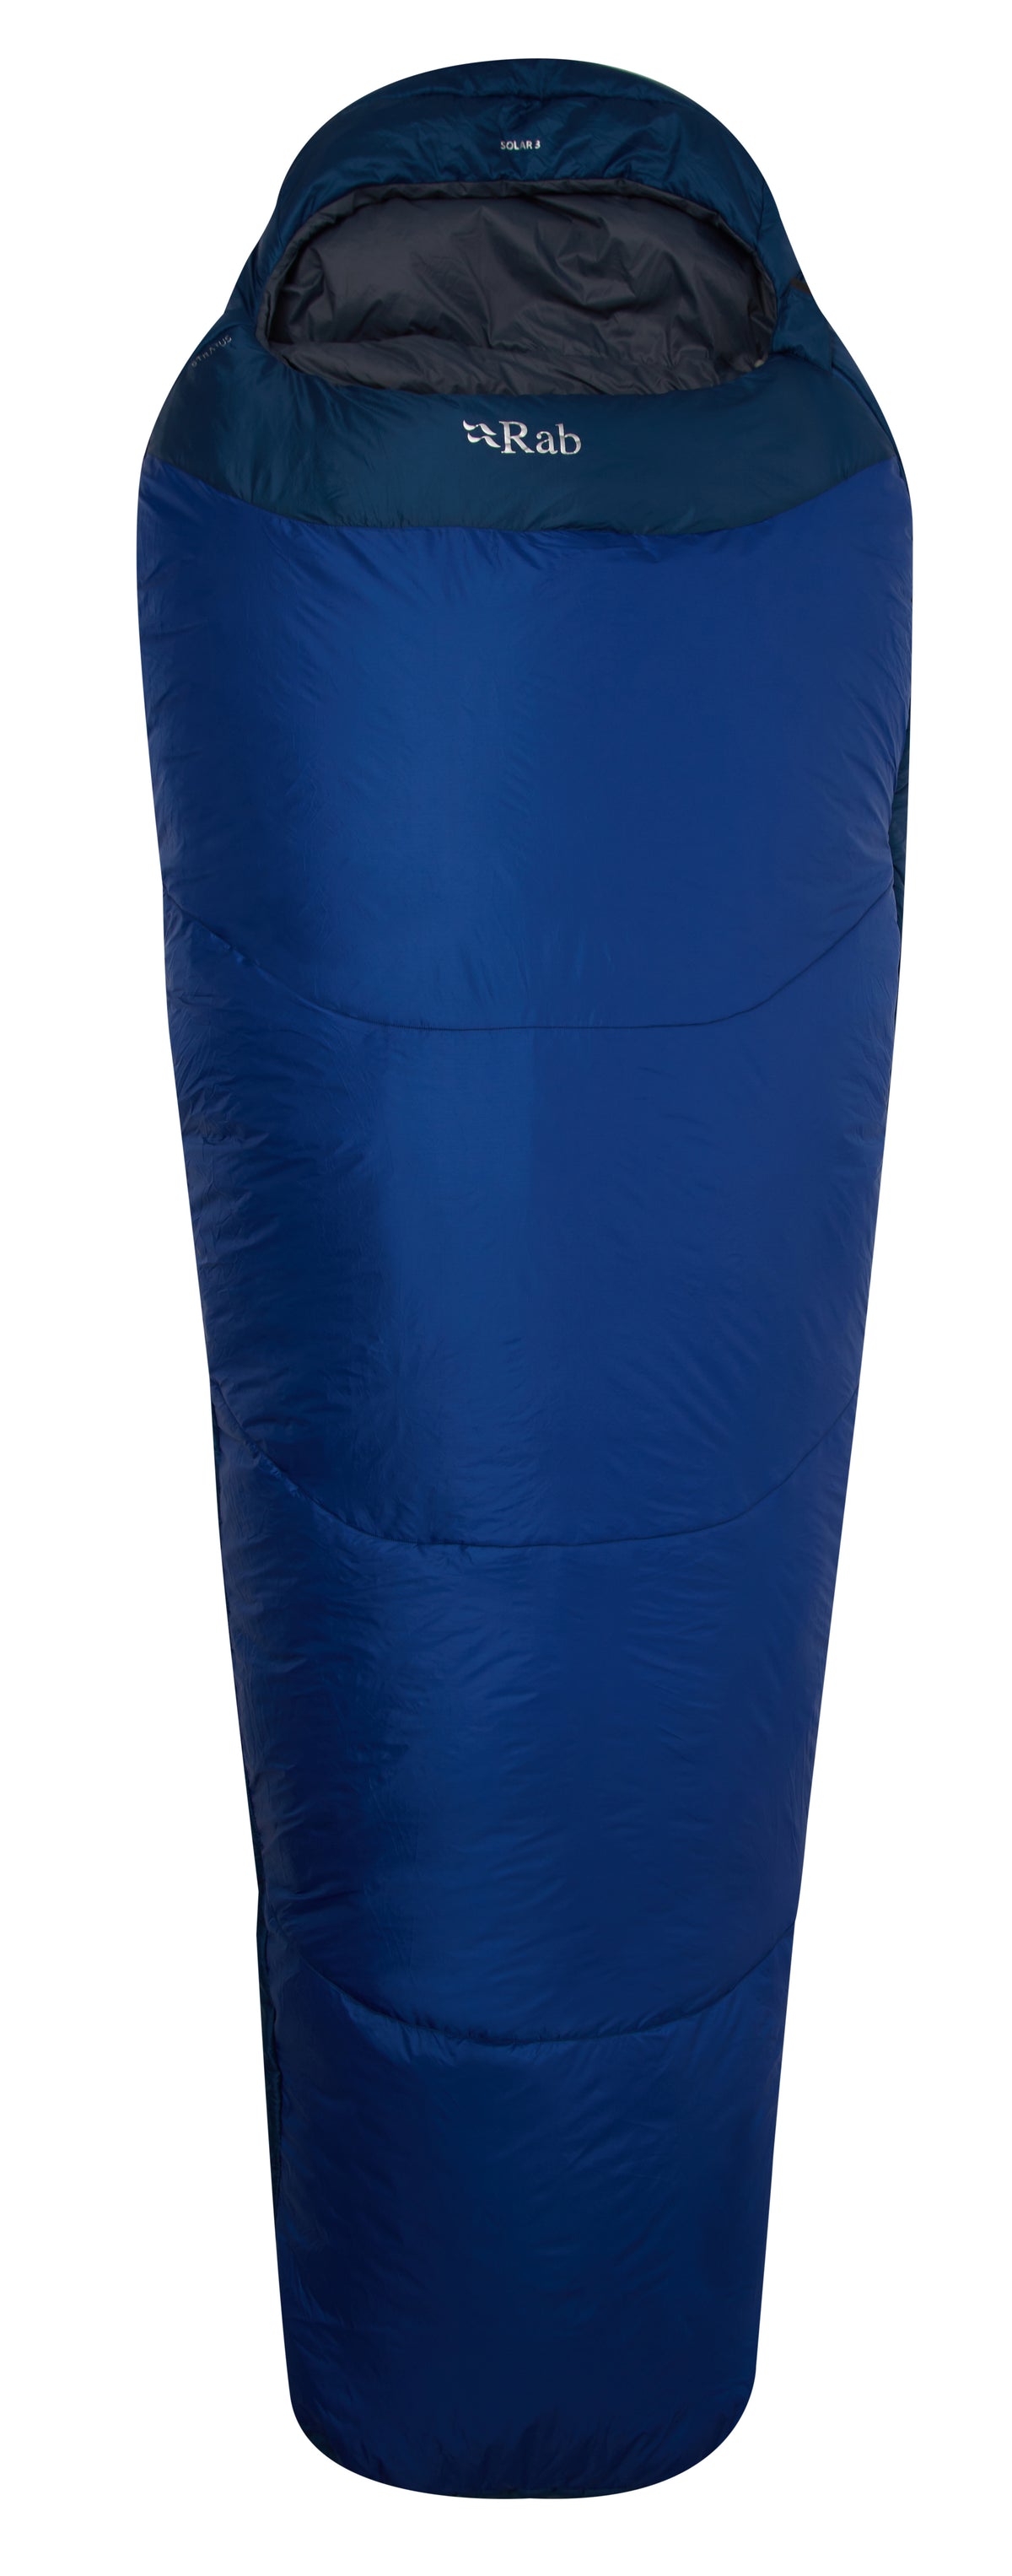 Rab Solar 3 XL (Extra Long) Sleeping Bag